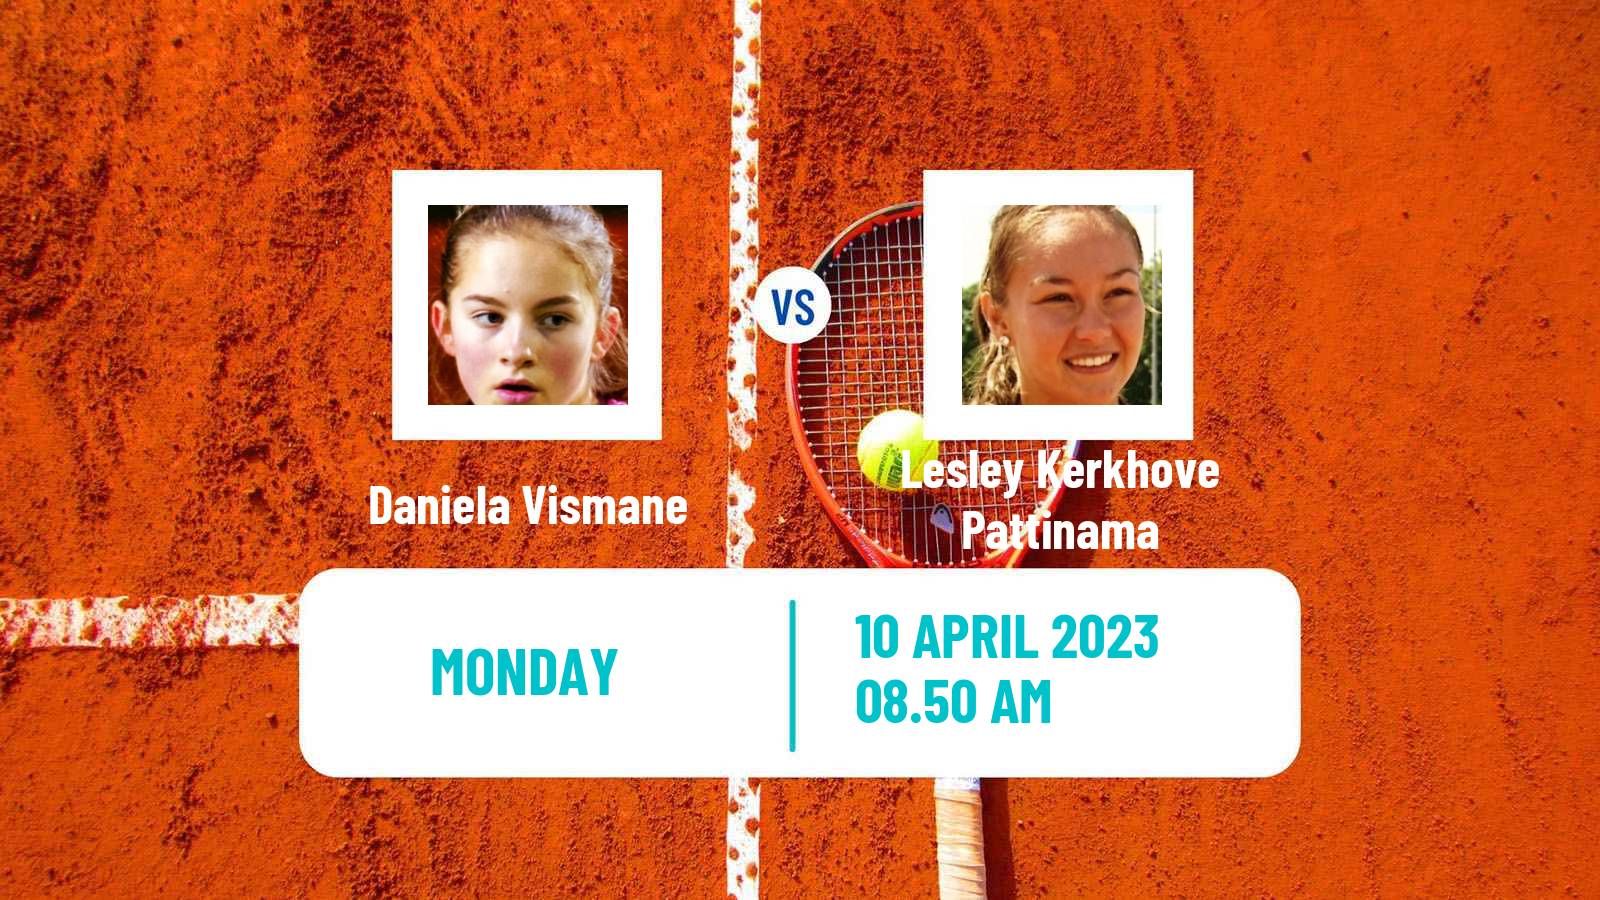 Tennis WTA Billie Jean King Cup Group I Daniela Vismane - Lesley Kerkhove Pattinama